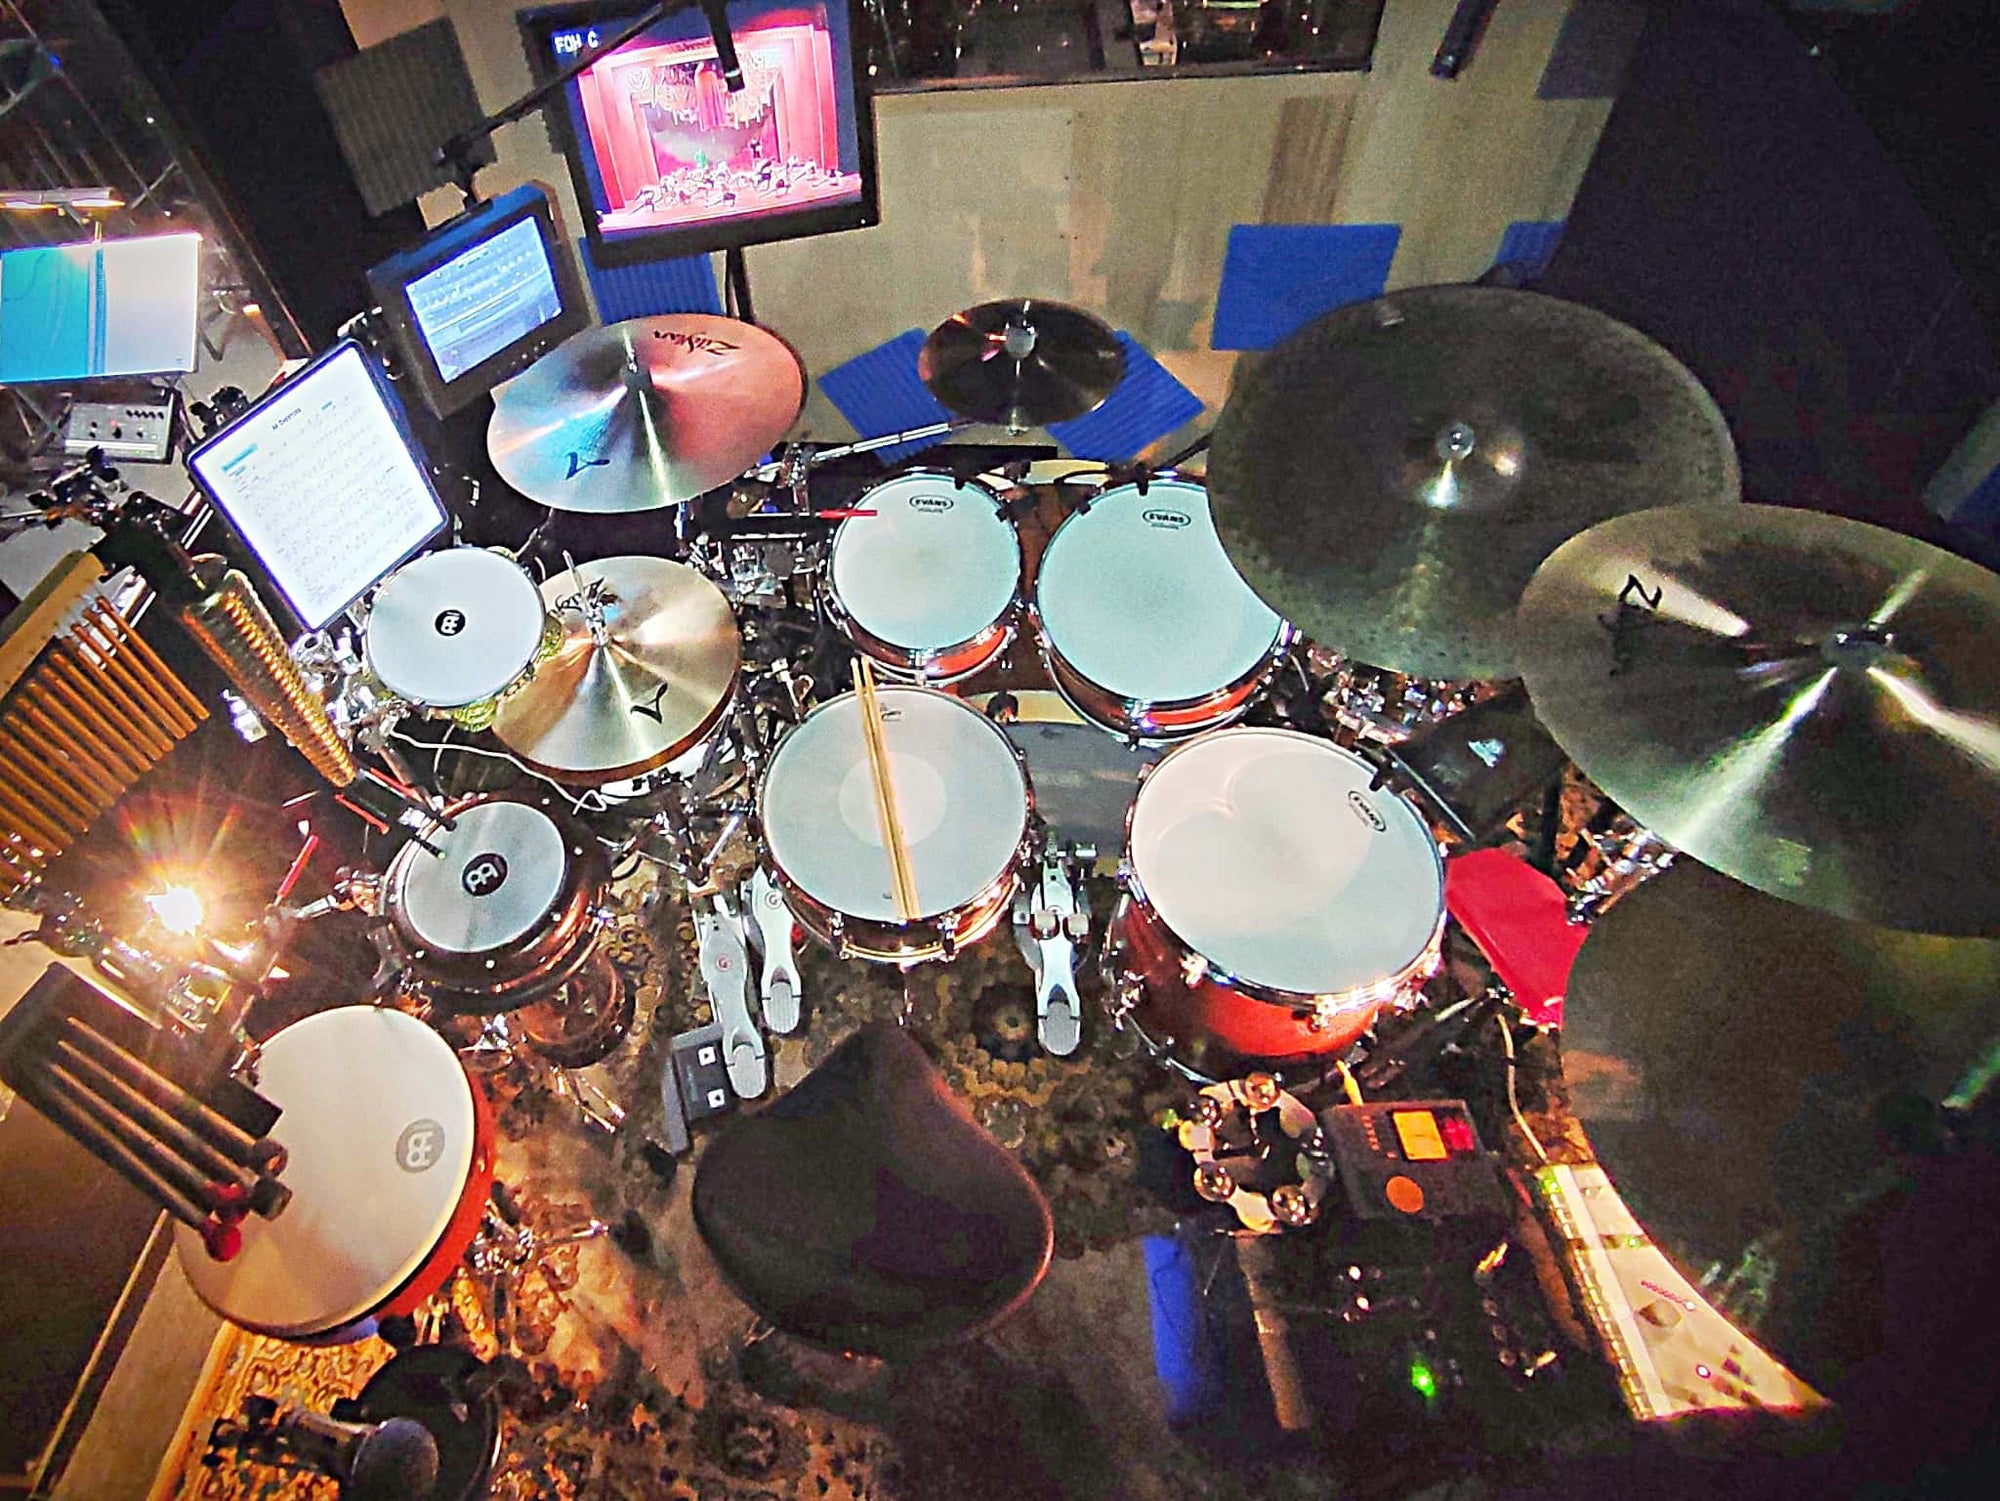 Ángel Crespo's drum set setup for the International Production of Disney's Aladdin at the Teatro Coliseum, in Madrid, Spain